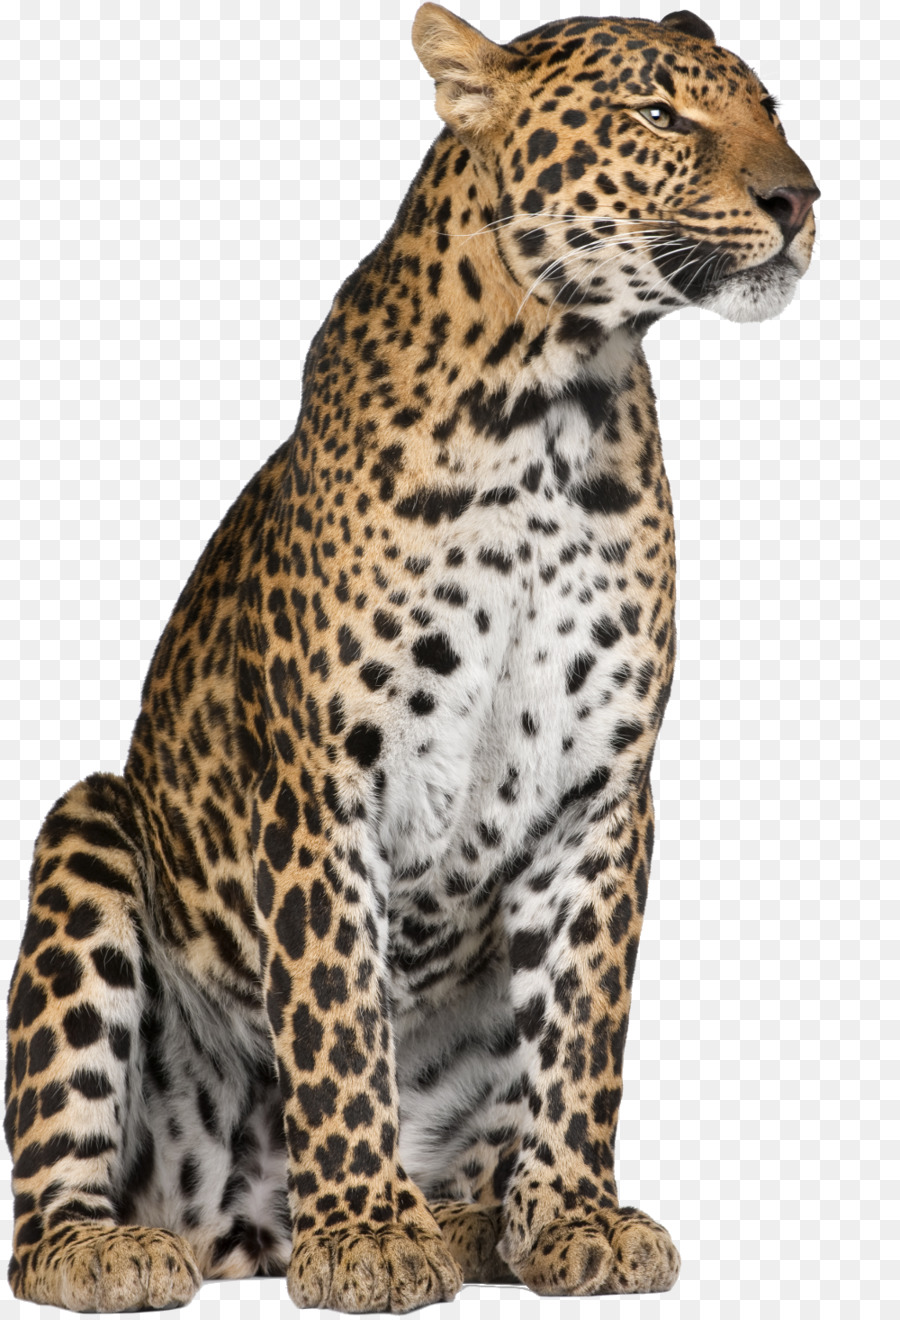 Leopard Jaguar Cheetah Felidae Whiskers - leopard png download - 1000*1464 - Free Transparent Leopard png Download.